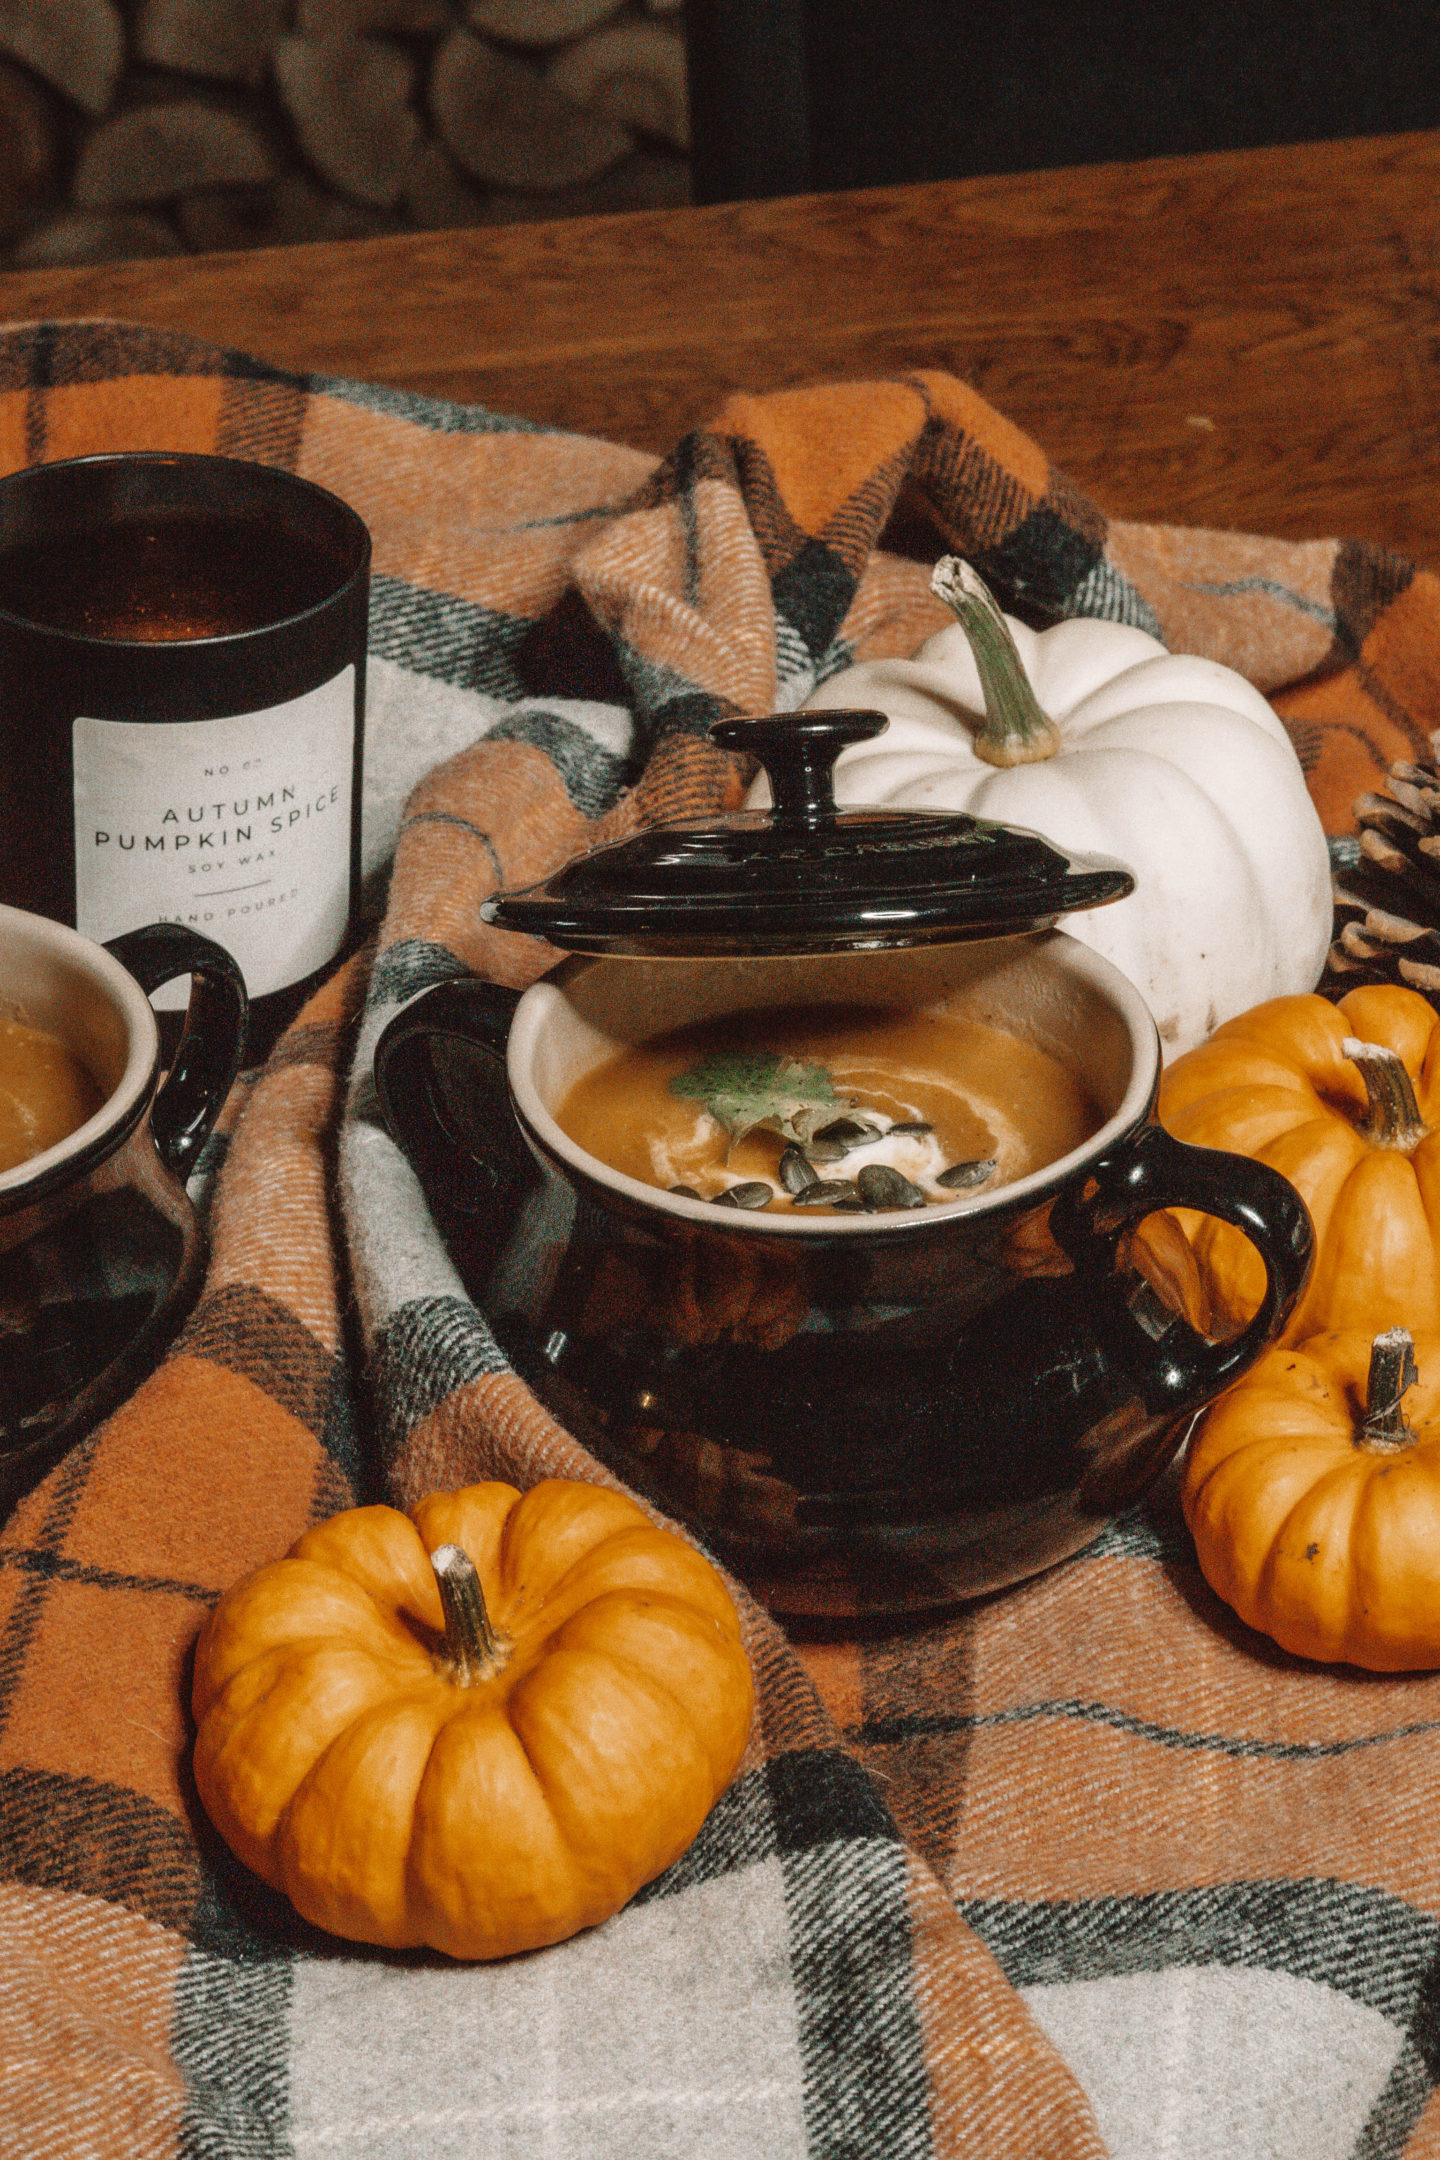 Easy and delicious pumpkin soup recipe